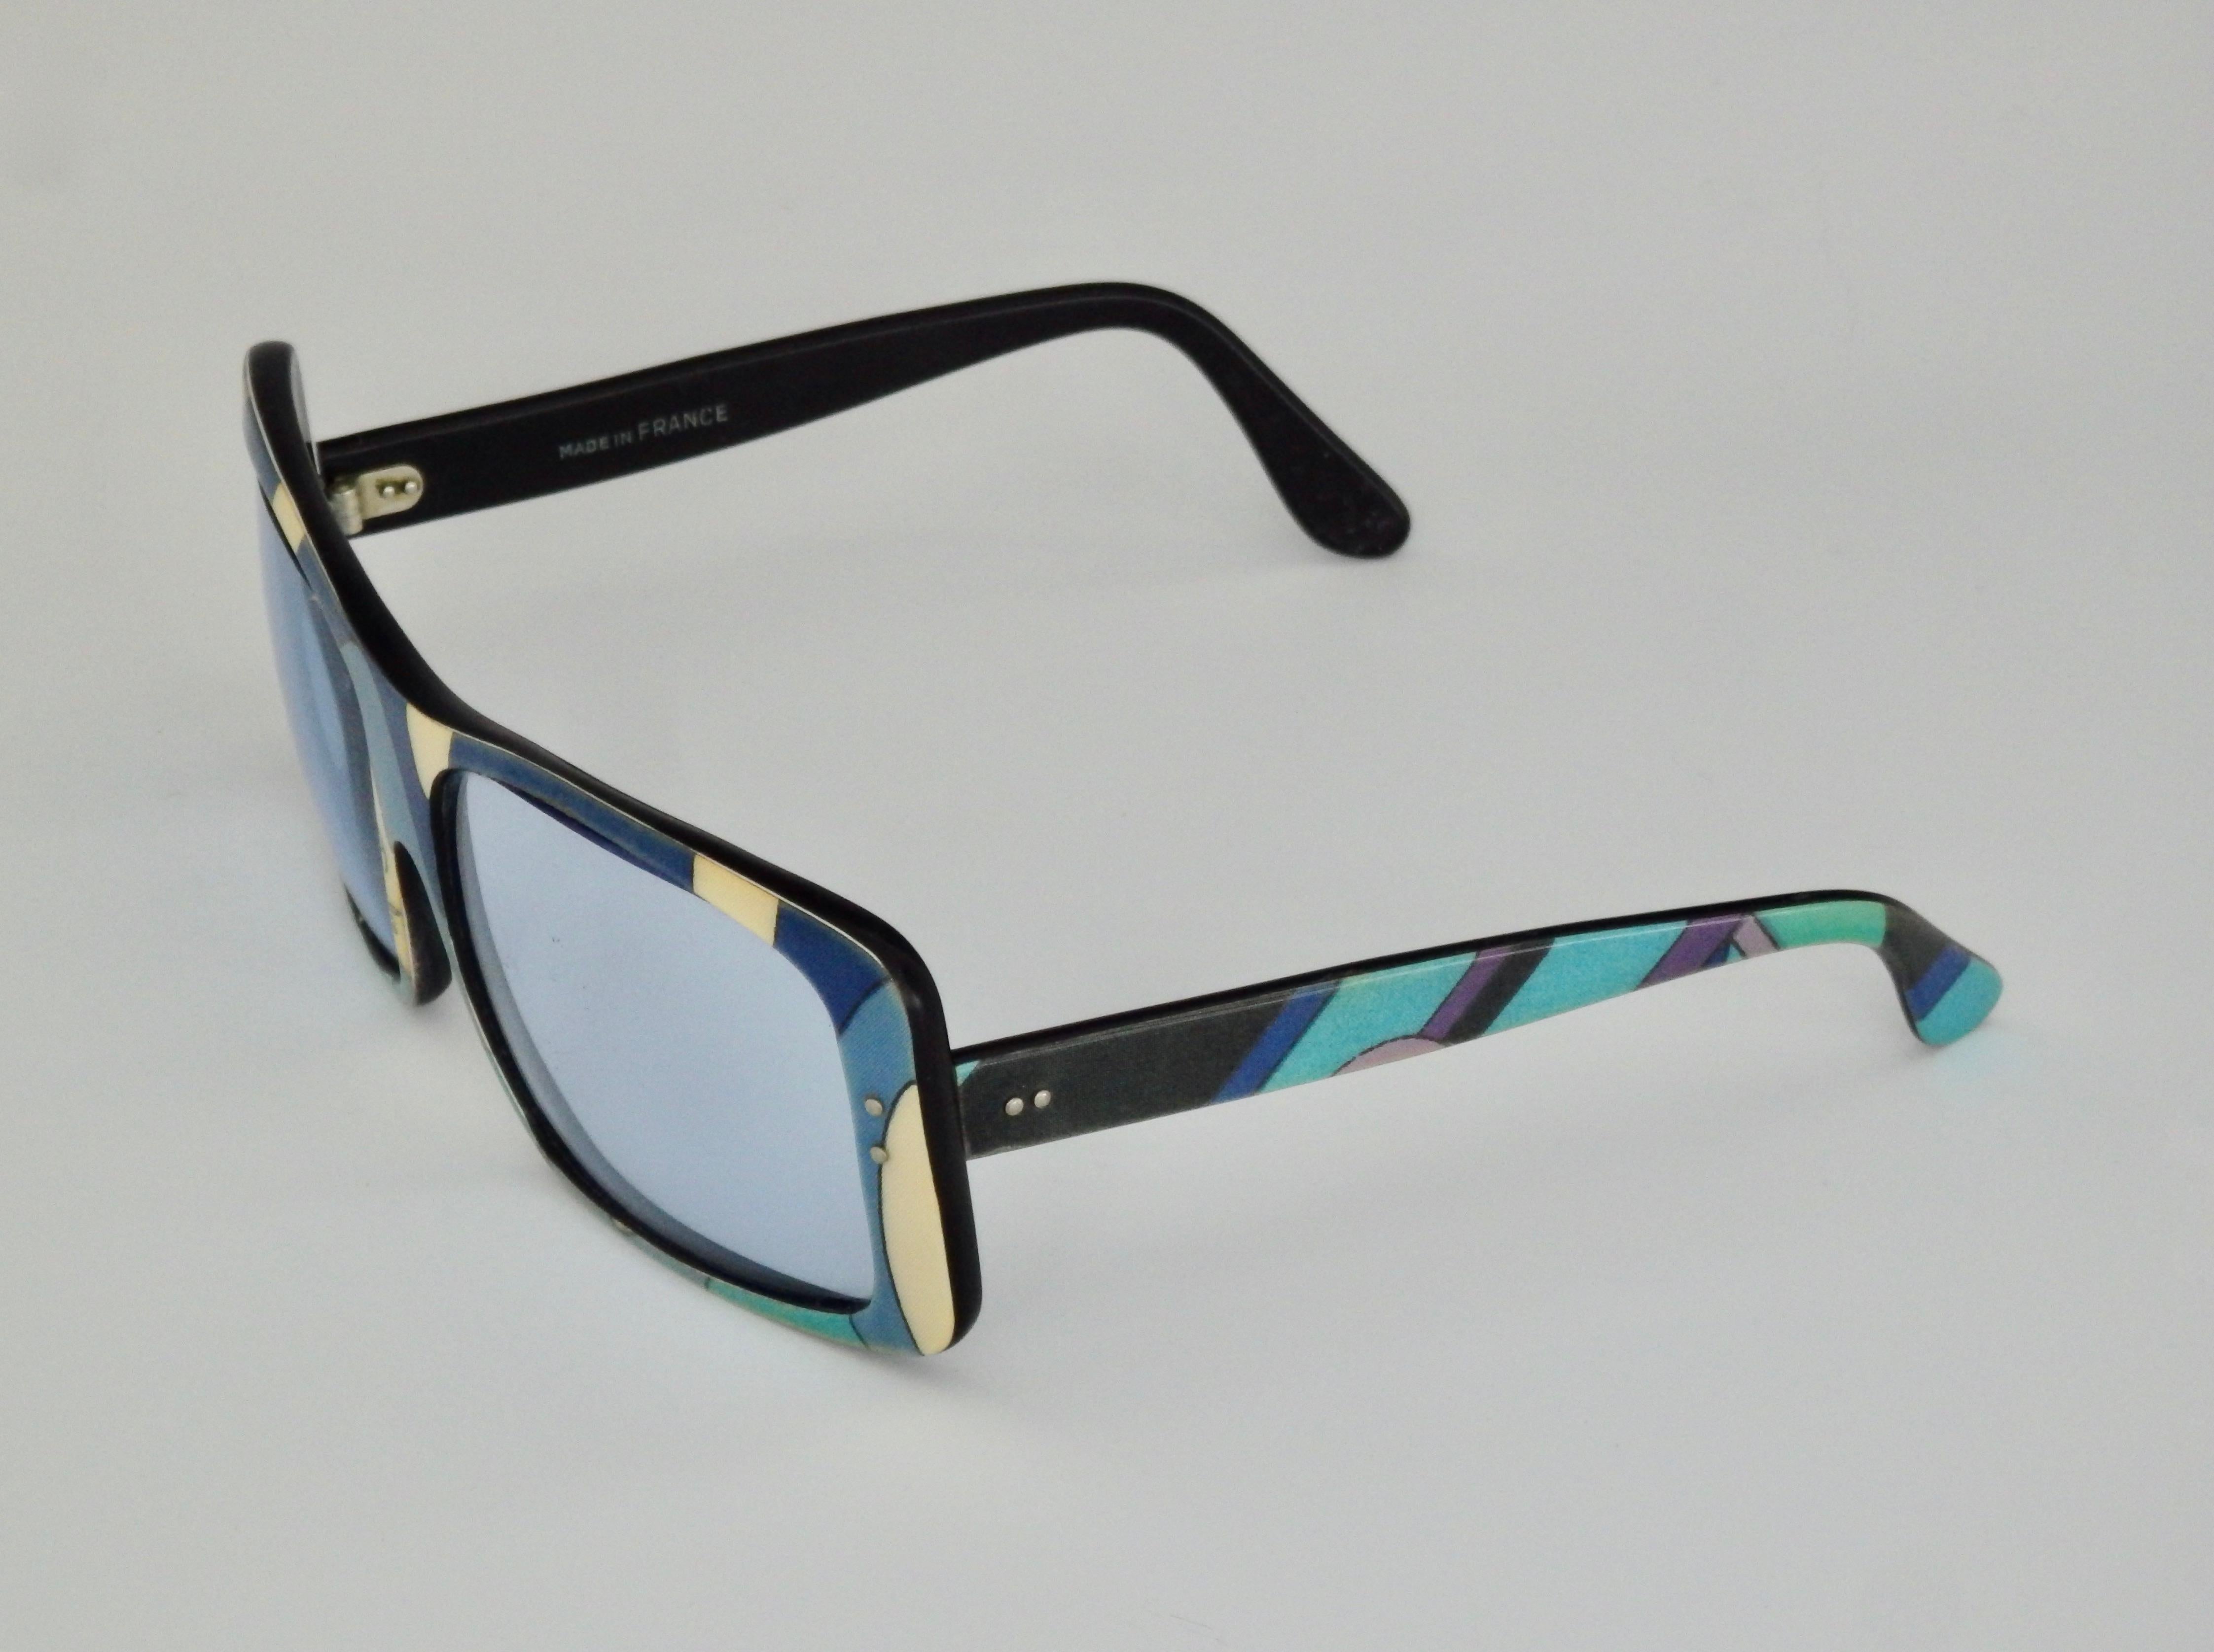 Emilio Pucci laminate signature printed plastic sunglasses. Light smokey-blue hued lenses. Made in France.
Measures: Hinge to hinge 5.5